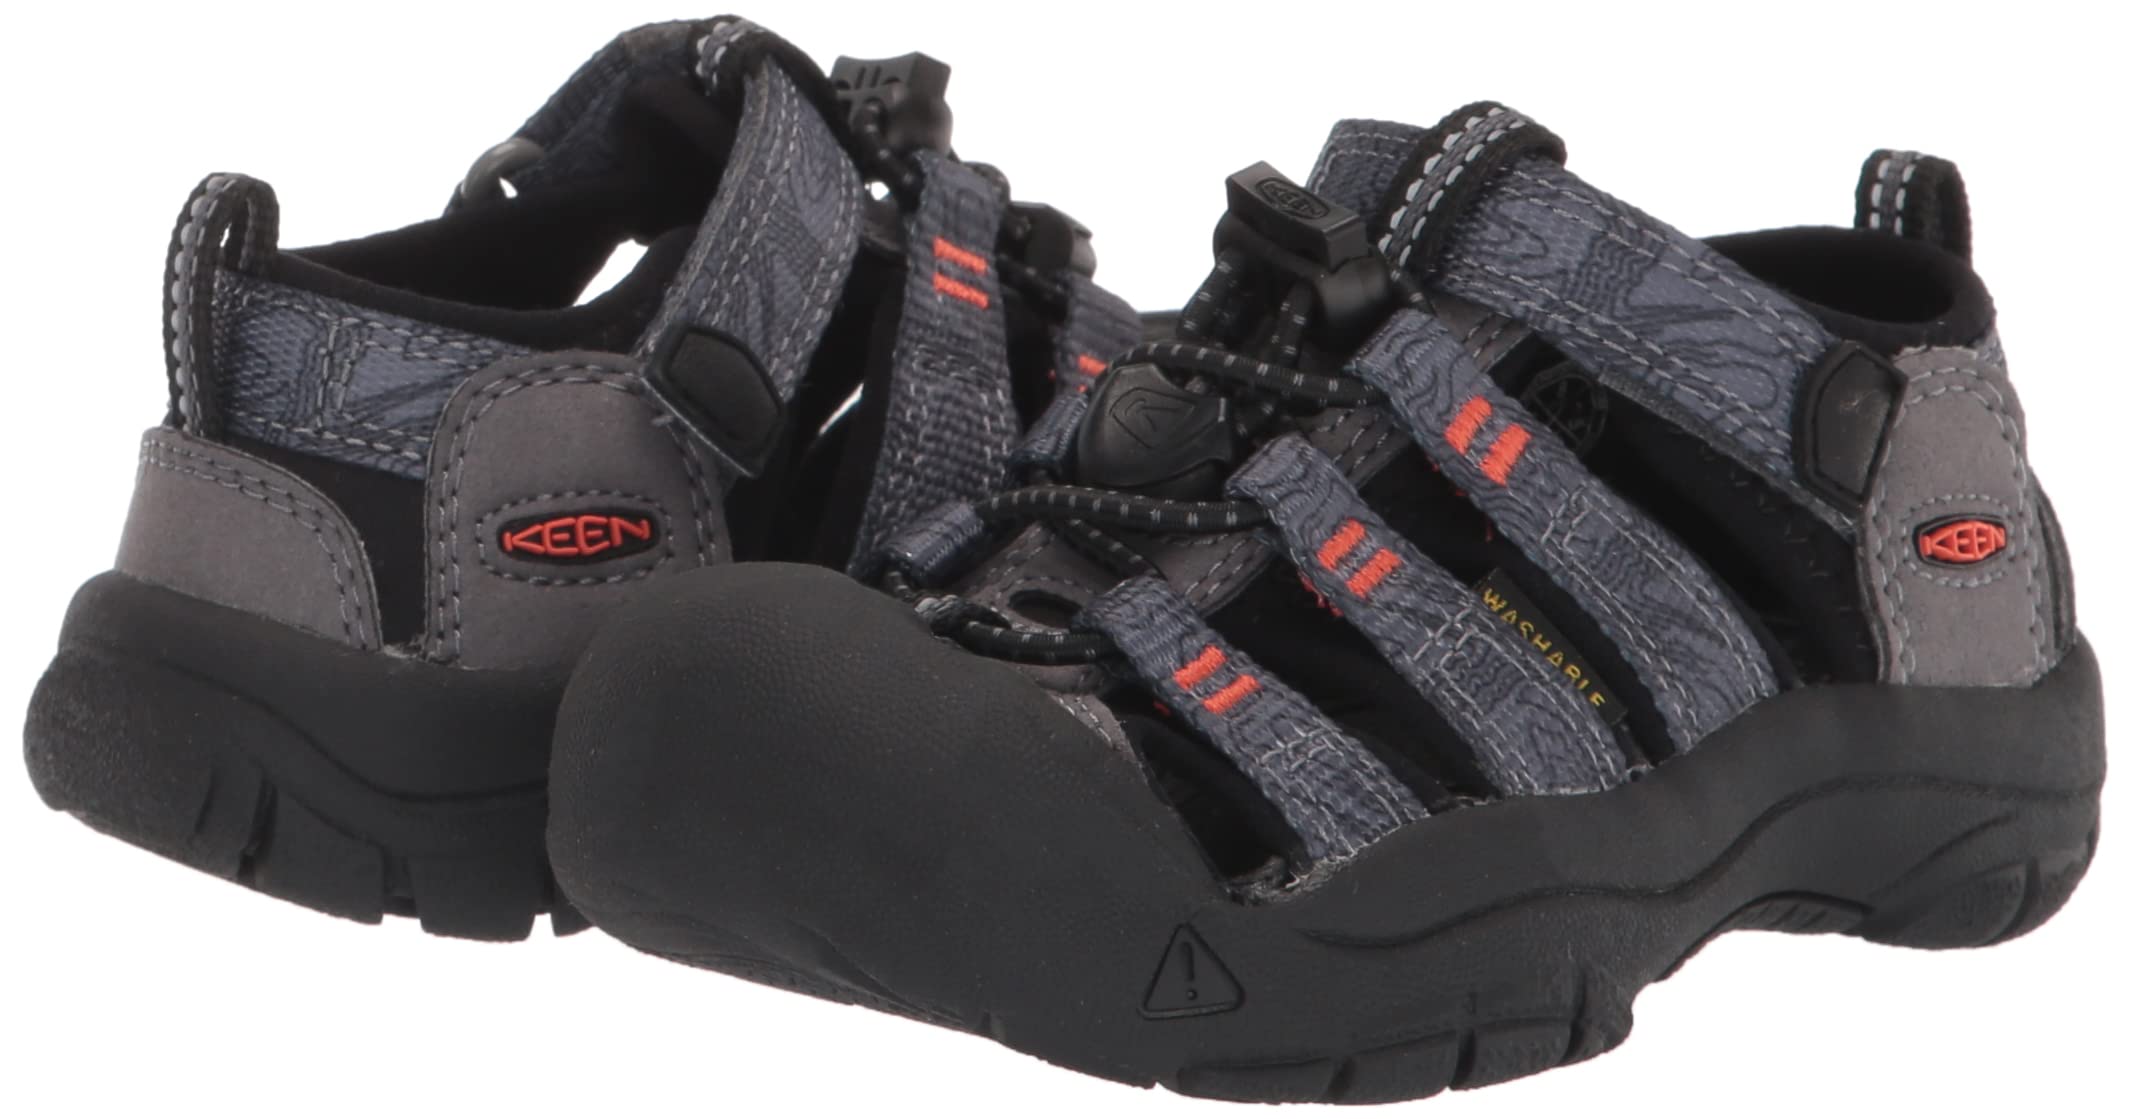 KEEN Unisex-Child Newport H2 Closed Toe Water Sandals, Steel Grey/Black, 5 Big Kid US